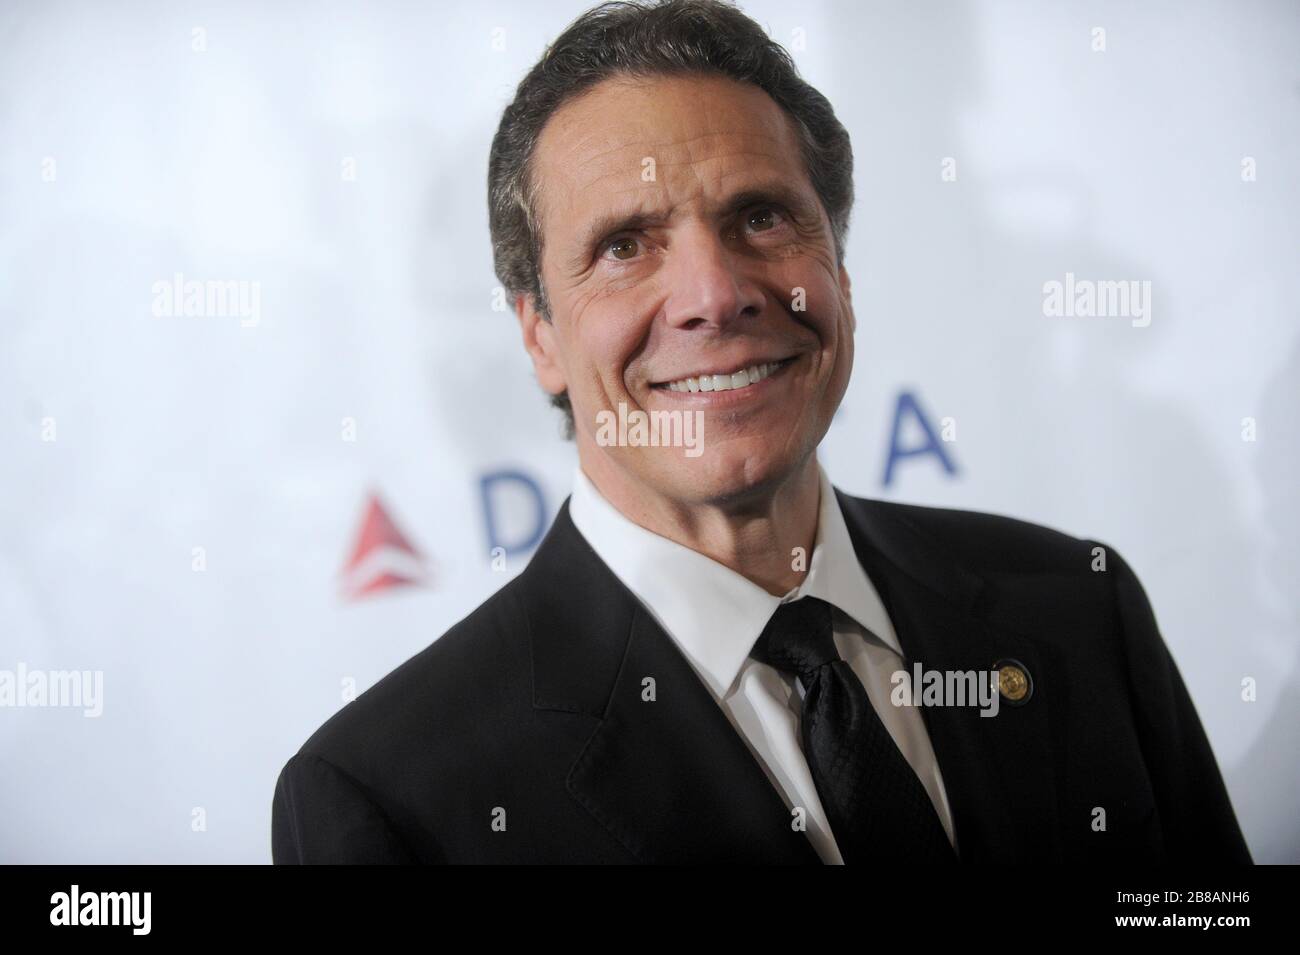 NEW YORK, NY - OCTOBRE 07: Andrew Cuomo assiste au gala de la Fondation Friars en l'honneur de Robert de Niro et Carlos Slim au Waldorf Astoria le 7 octobre 2014 à New York City People: Andrew Cuomo Banque D'Images